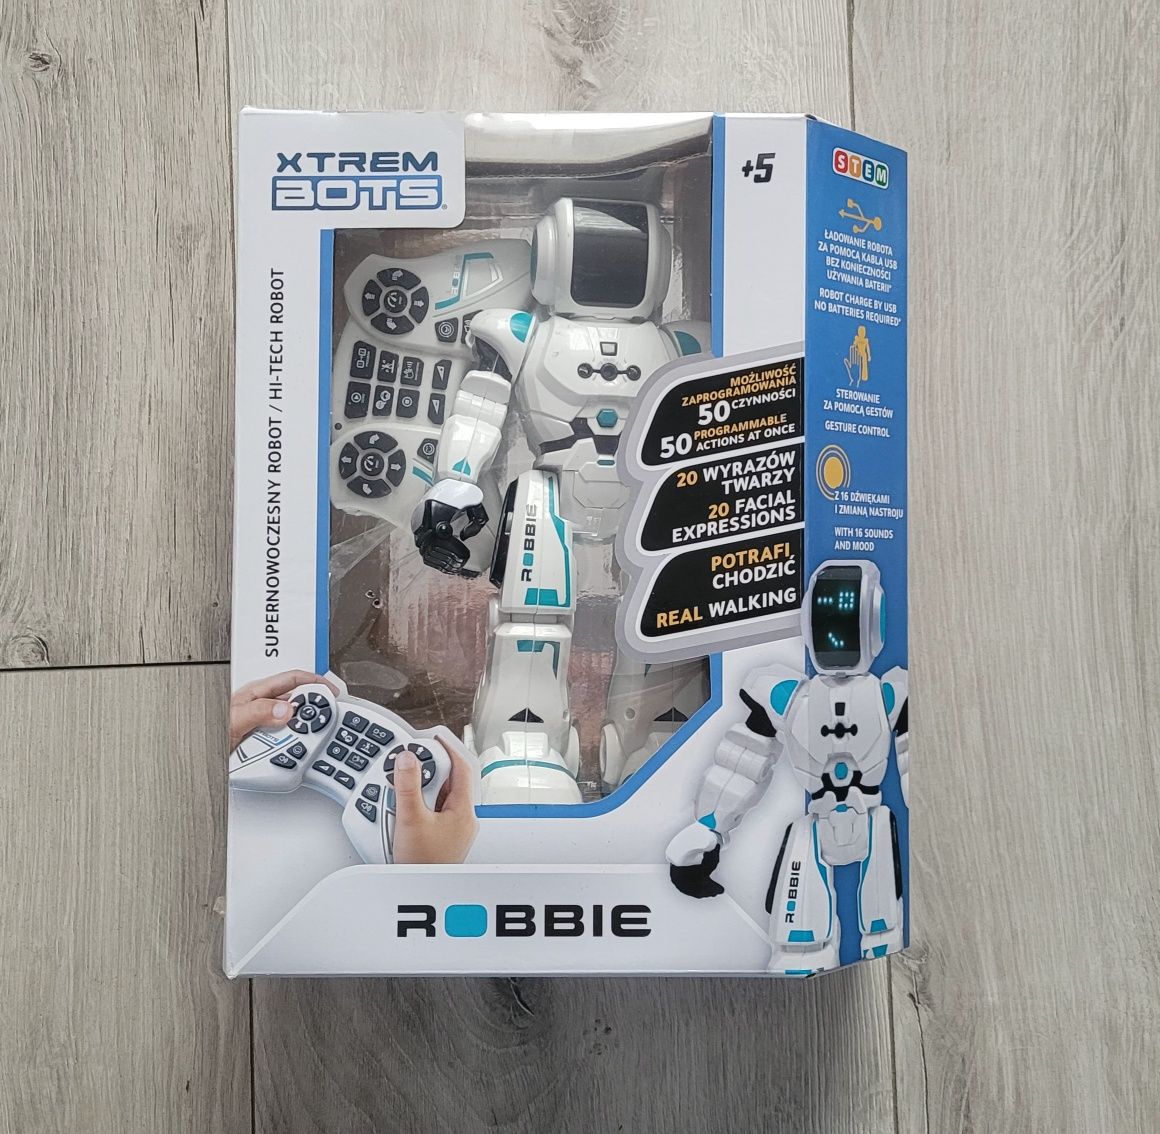 Xtrem Bots Robot interaktywny Robbie